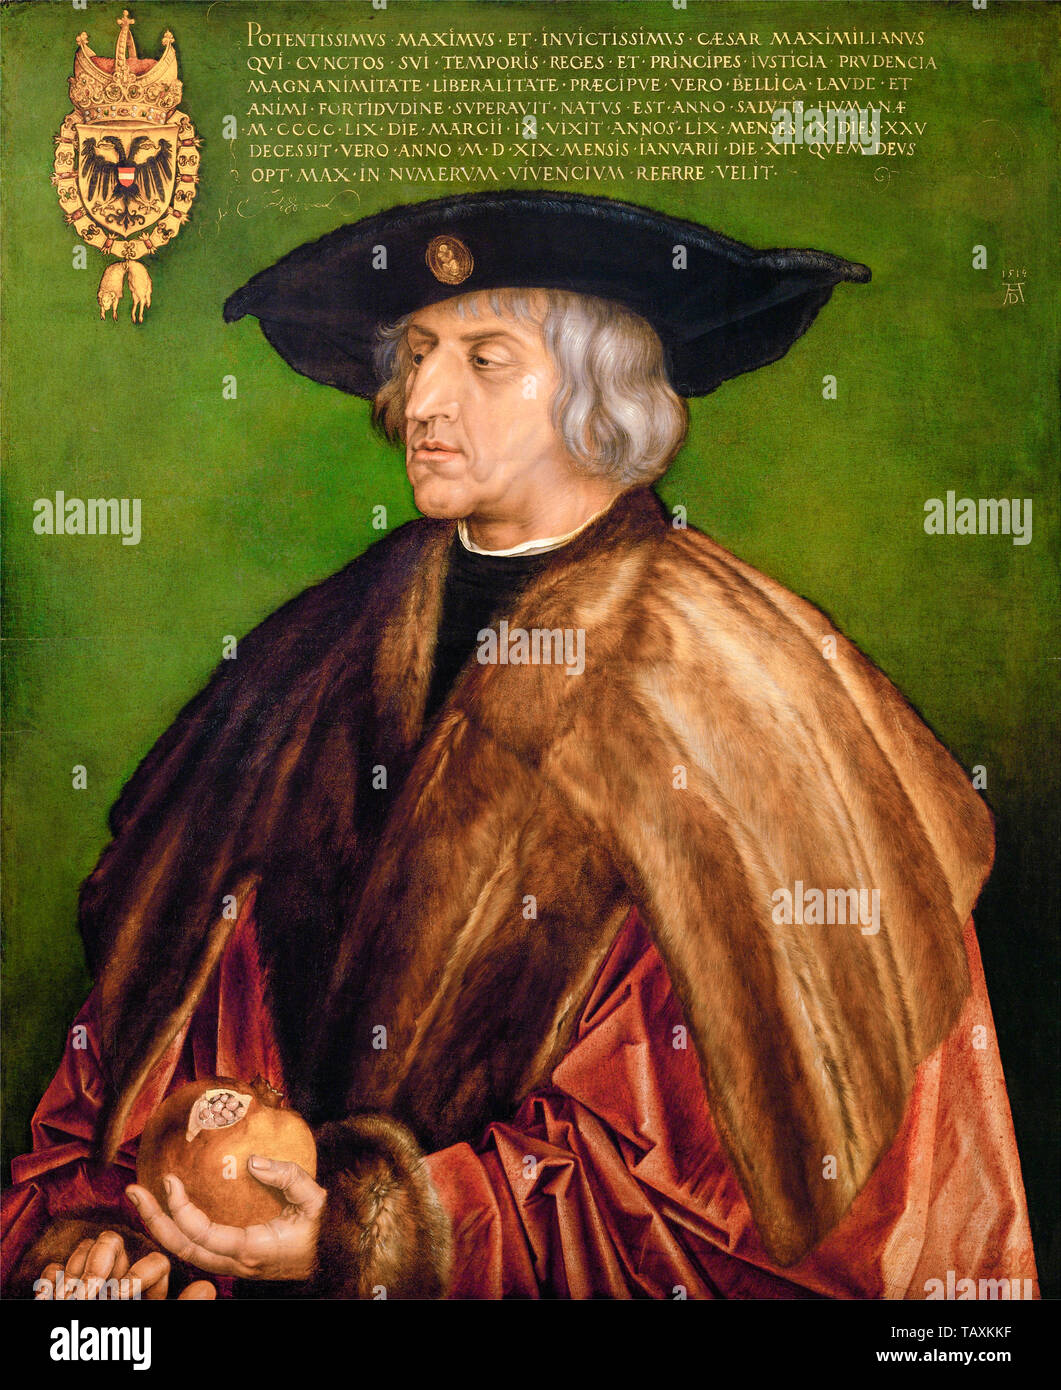 Albrecht Dürer, Portrait of Holy Roman Emperor Maximilian I  (1459-1519), portrait painting, 1519 Stock Photo